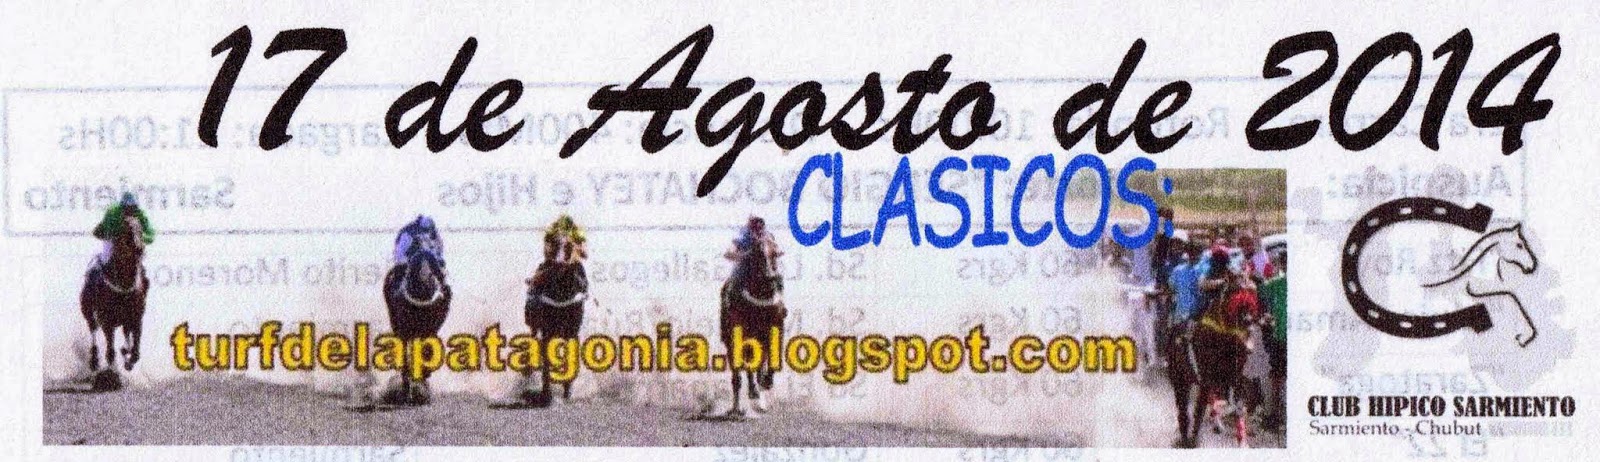 http://turfdelapatagonia.blogspot.com.ar/2014/08/1708-programa-de-carreras-de-caballos.html